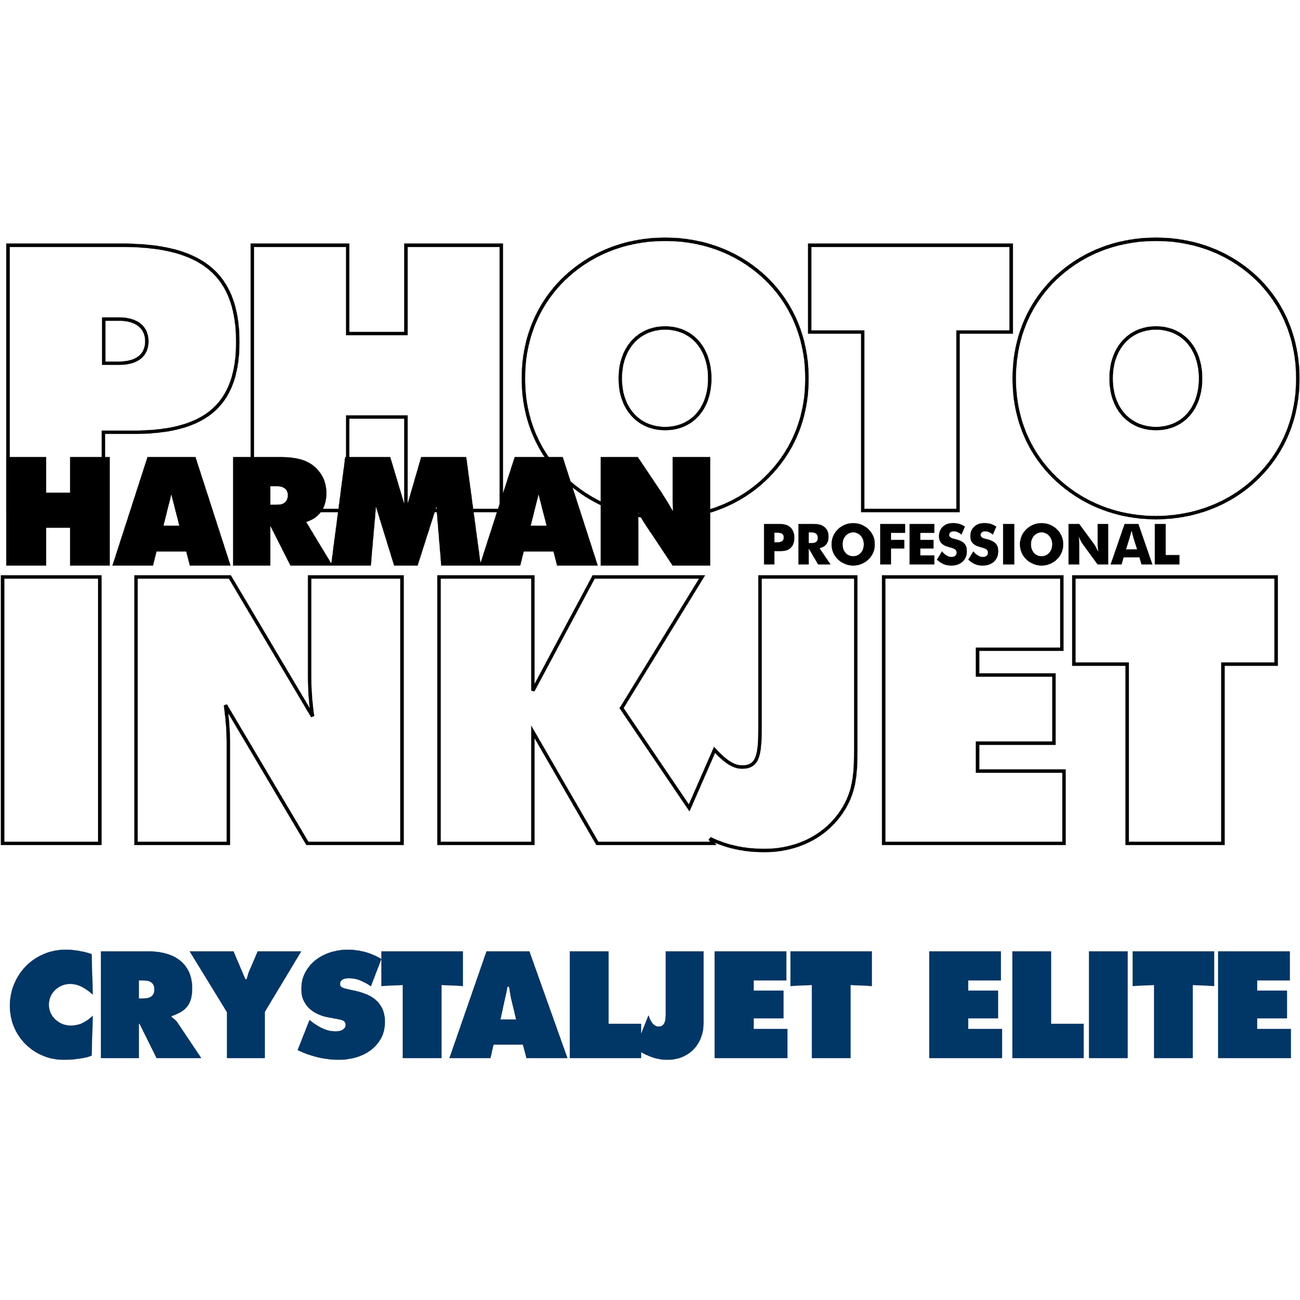 Harman Photo Crystaljet Elite Gloss 24